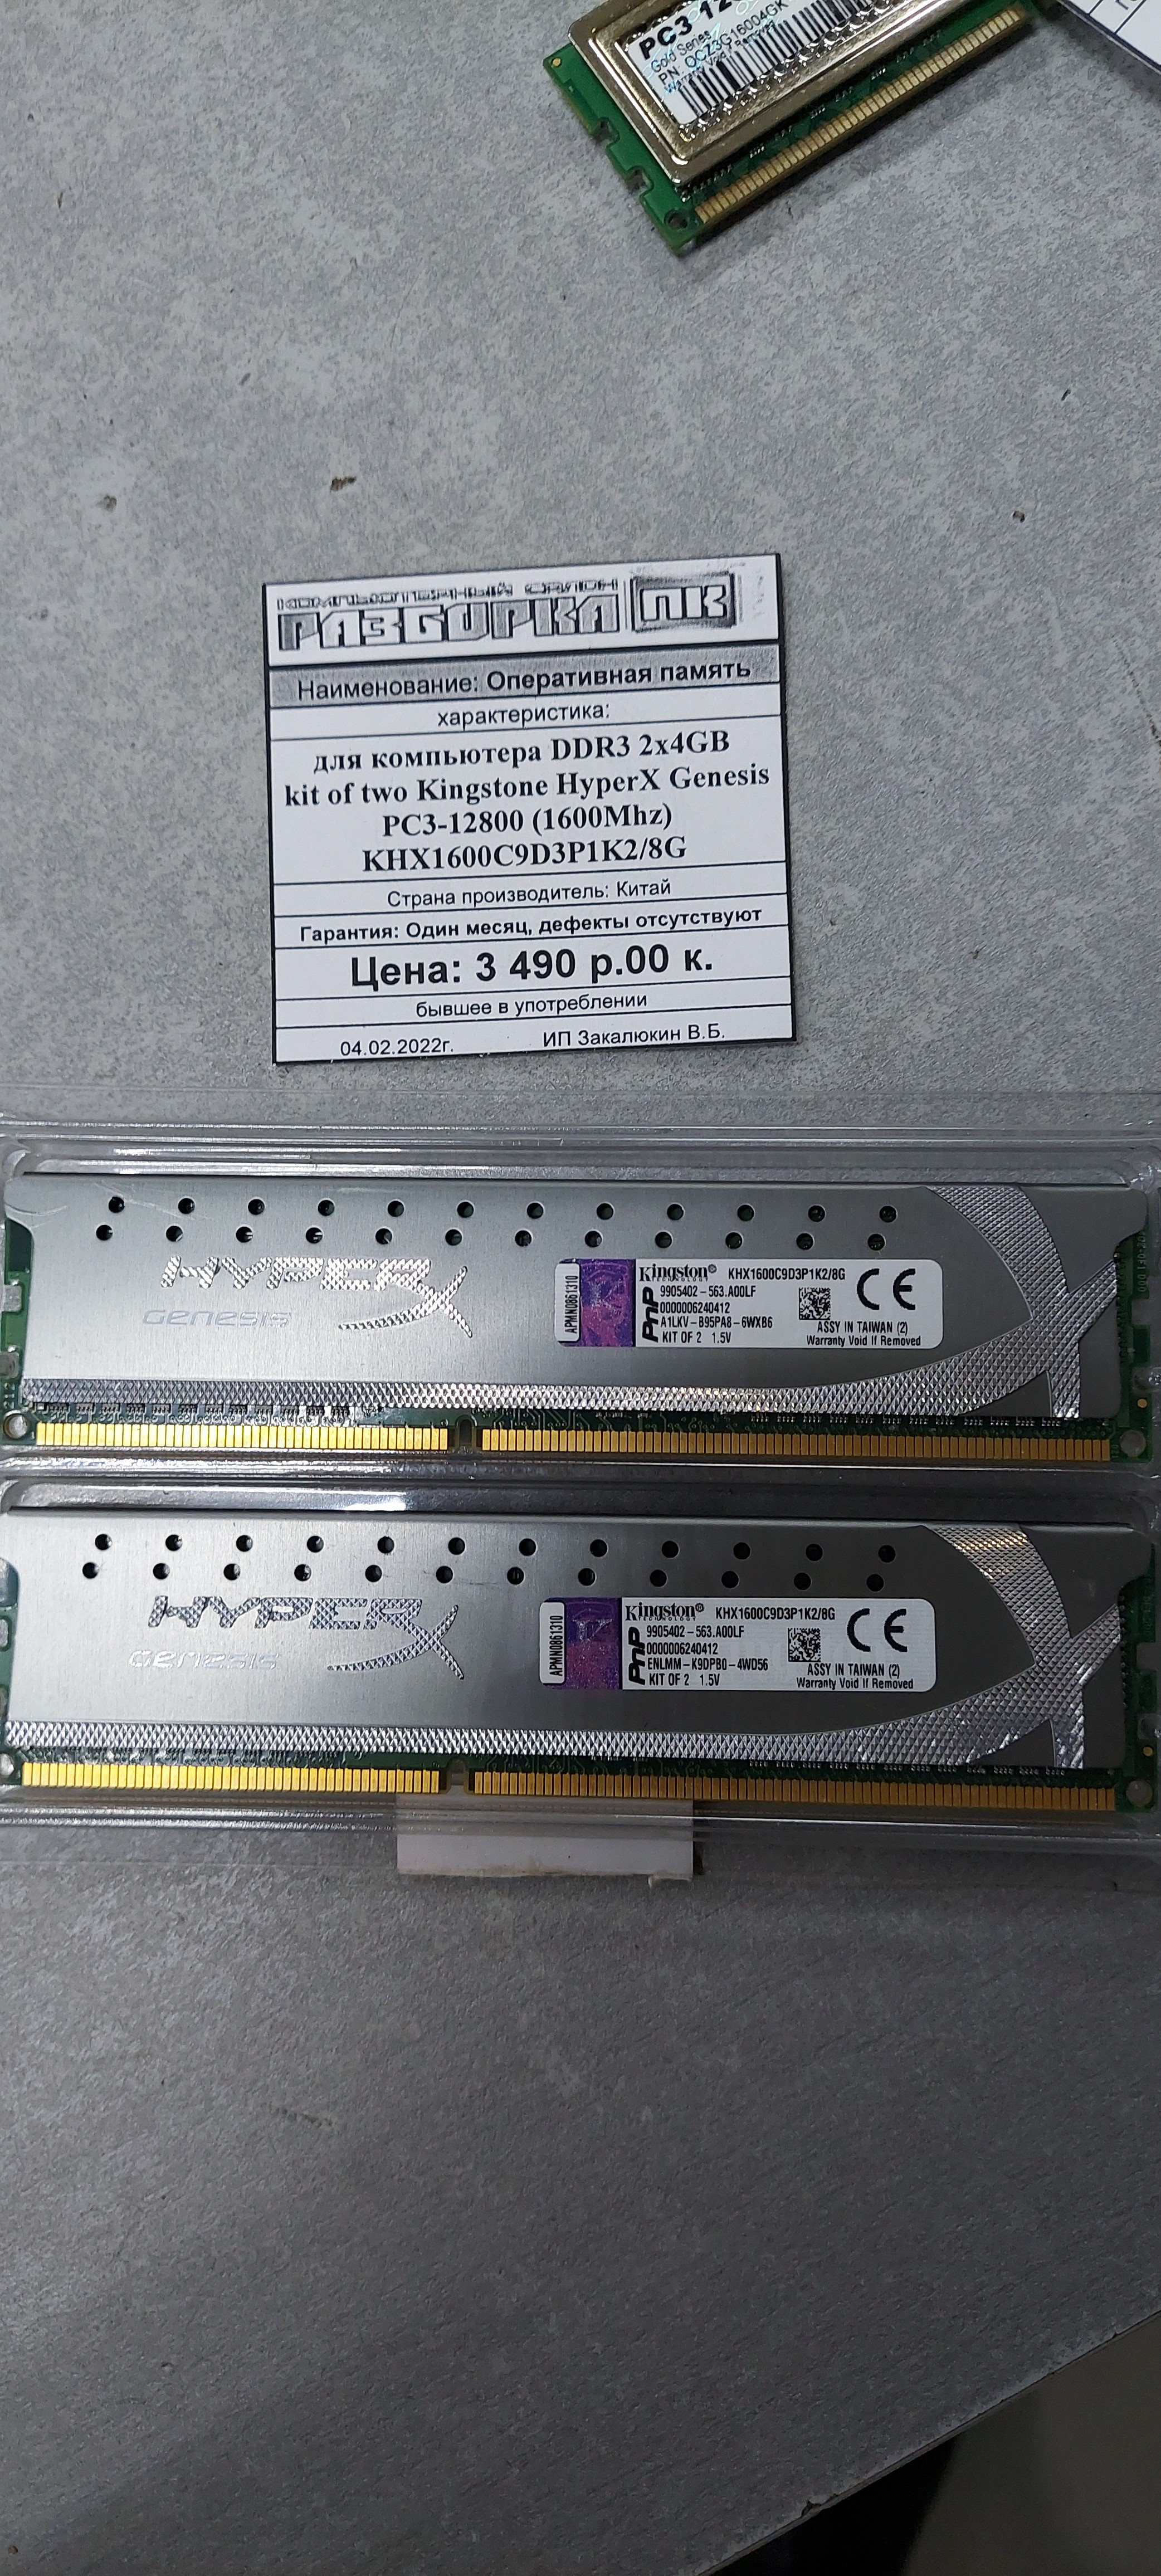 Оперативная память DIMM DDR3 2x4GB kit of two Kingston HyperX Genesis